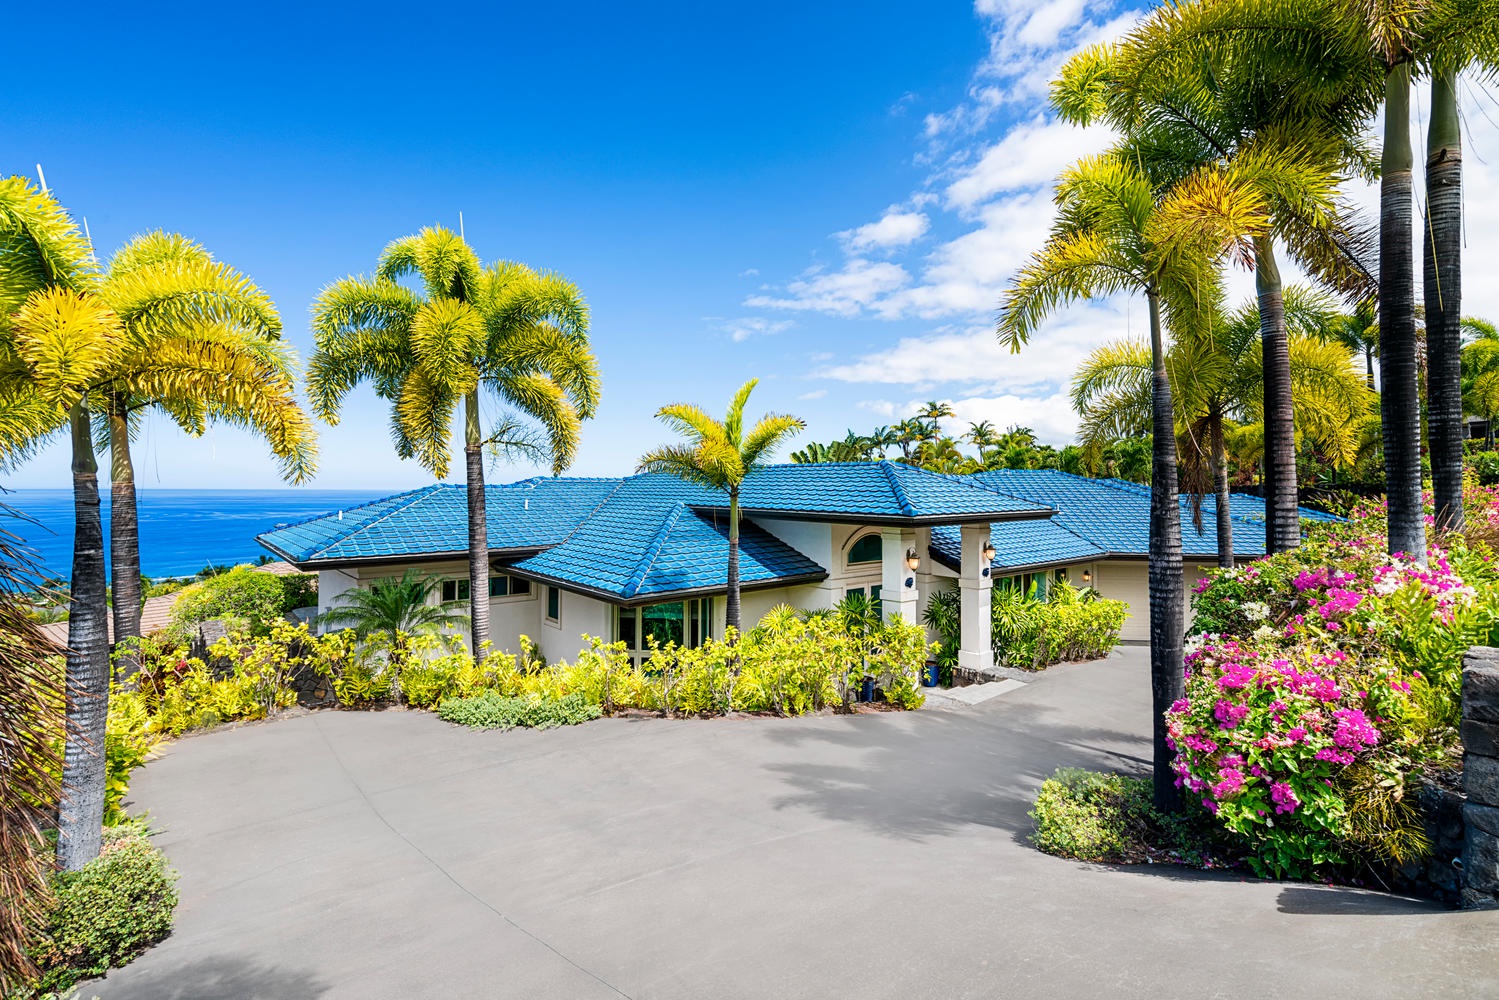 Kailua Kona Vacation Rentals, Blue Hawaii - Blue Hawaii from the top of the driveway.